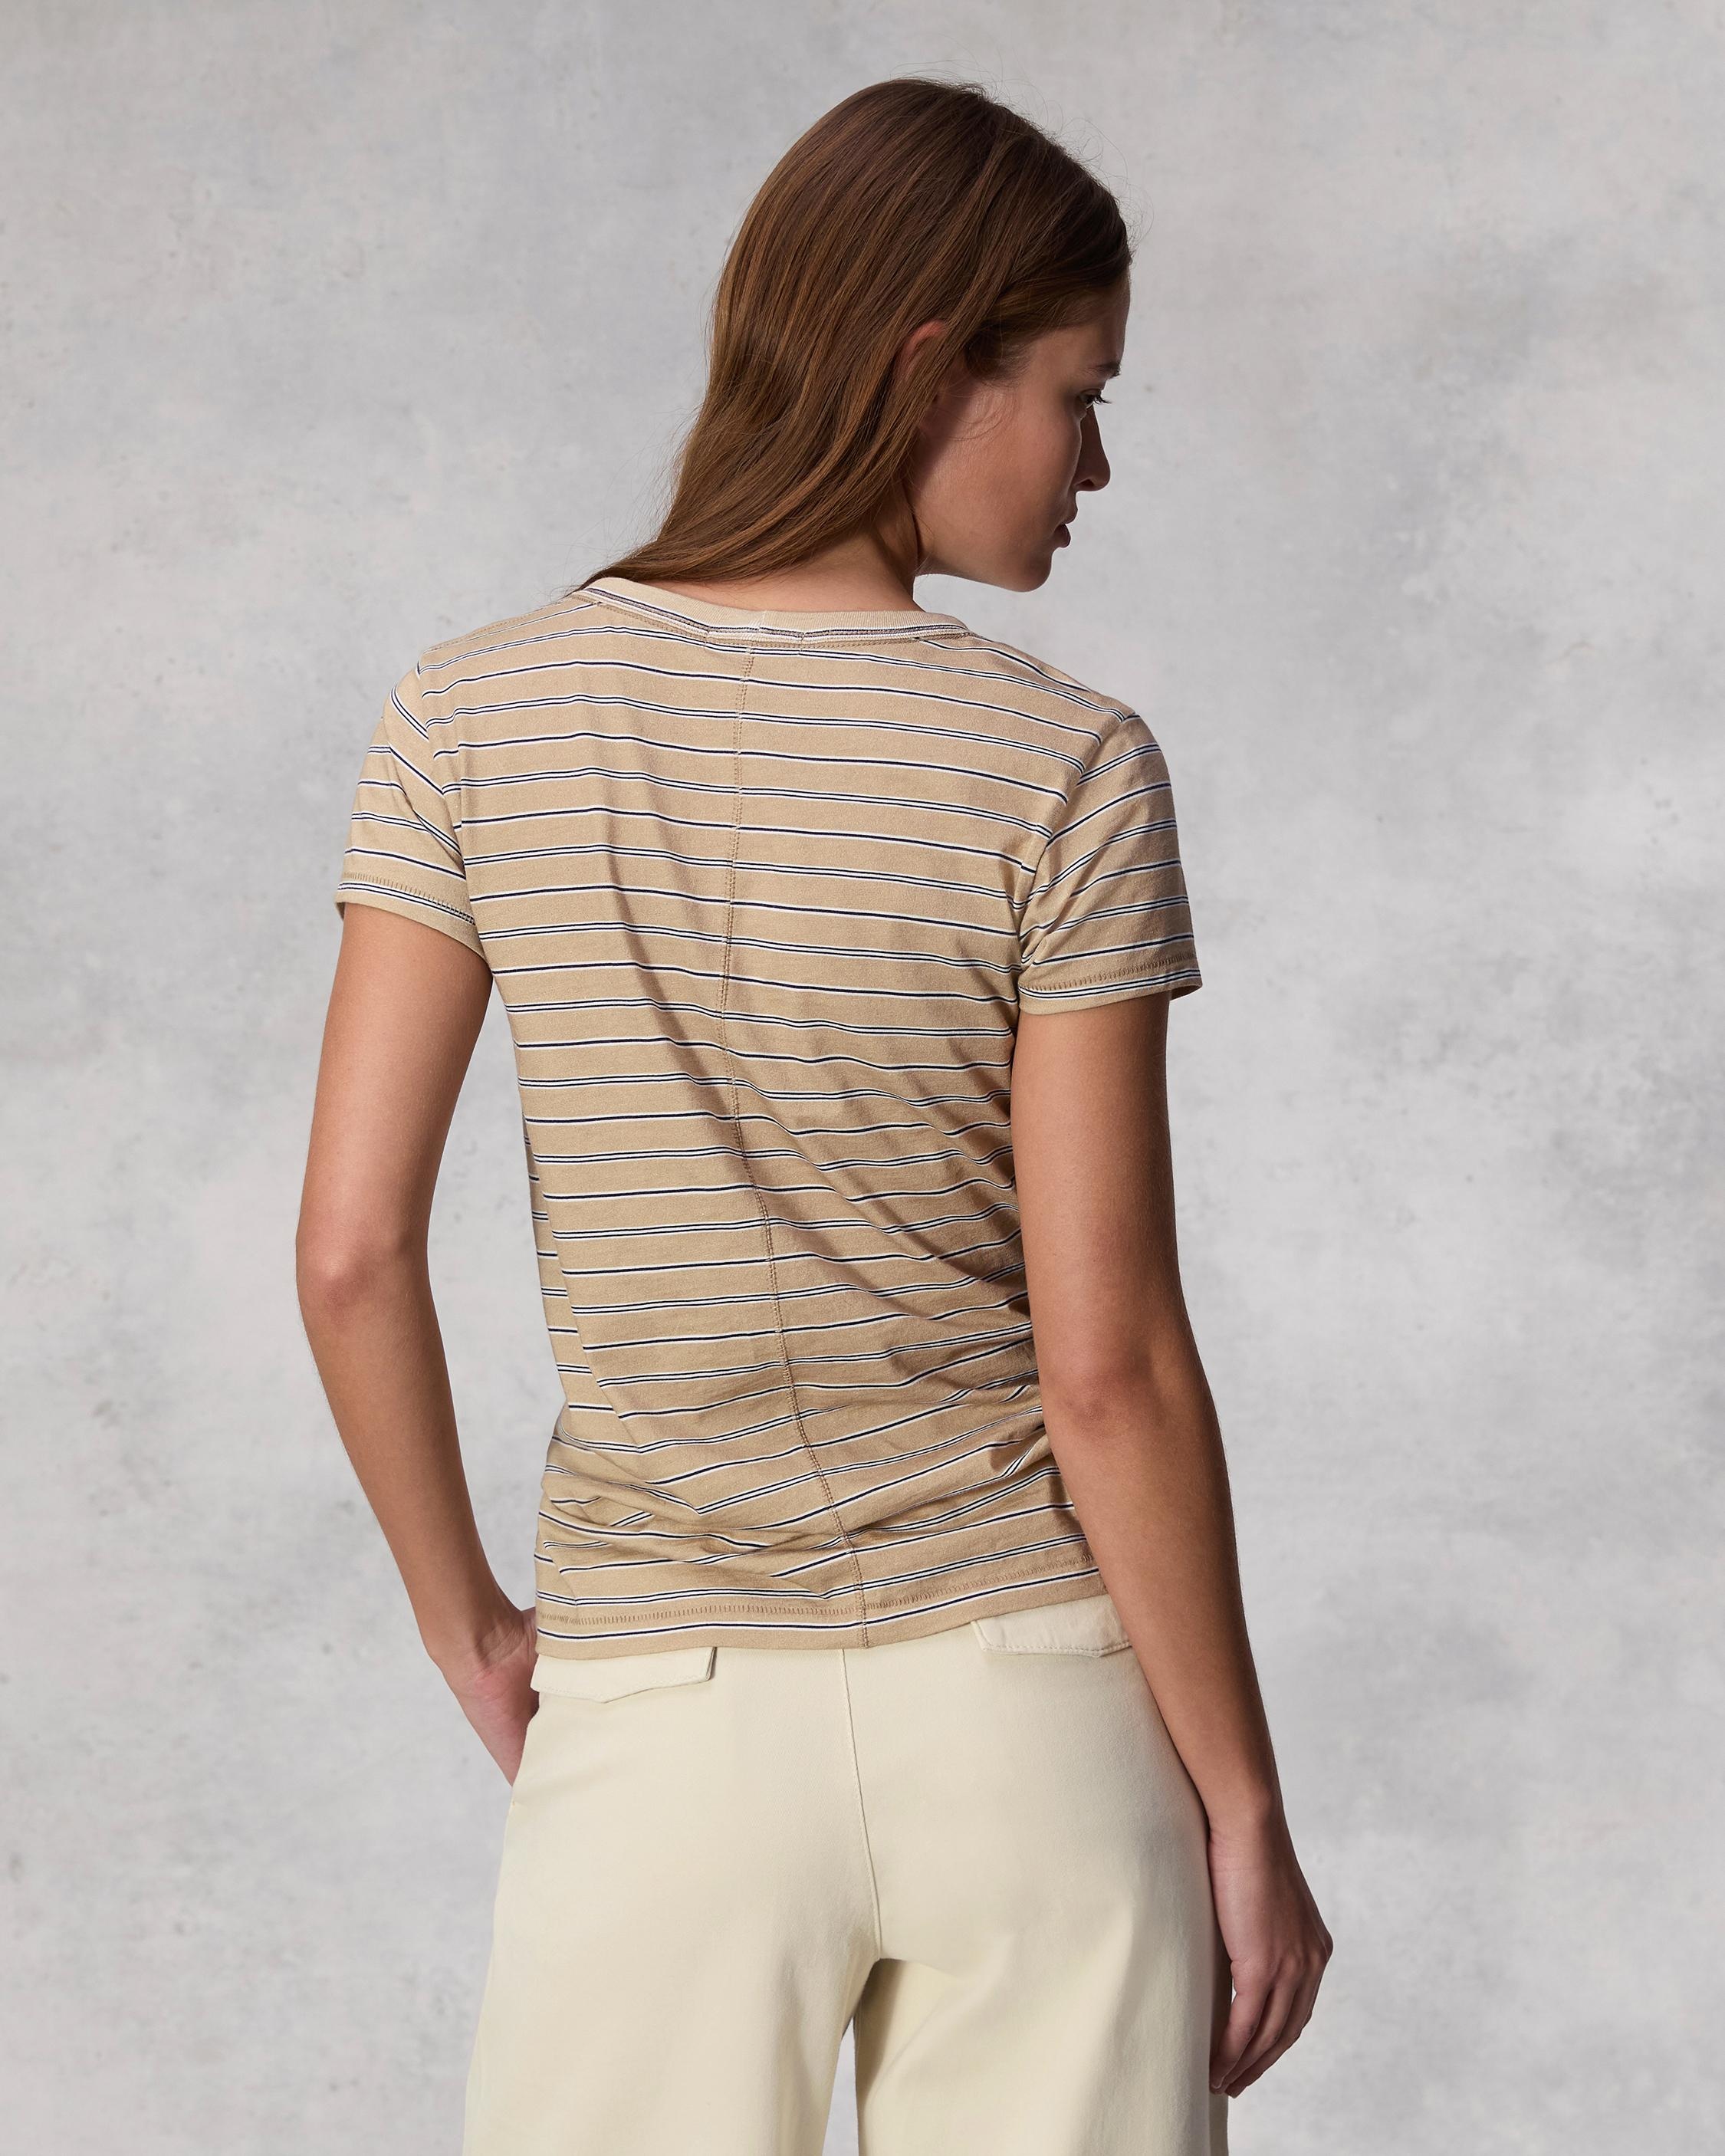 The Slub Stripe Tee
Cotton T-Shirt - 5